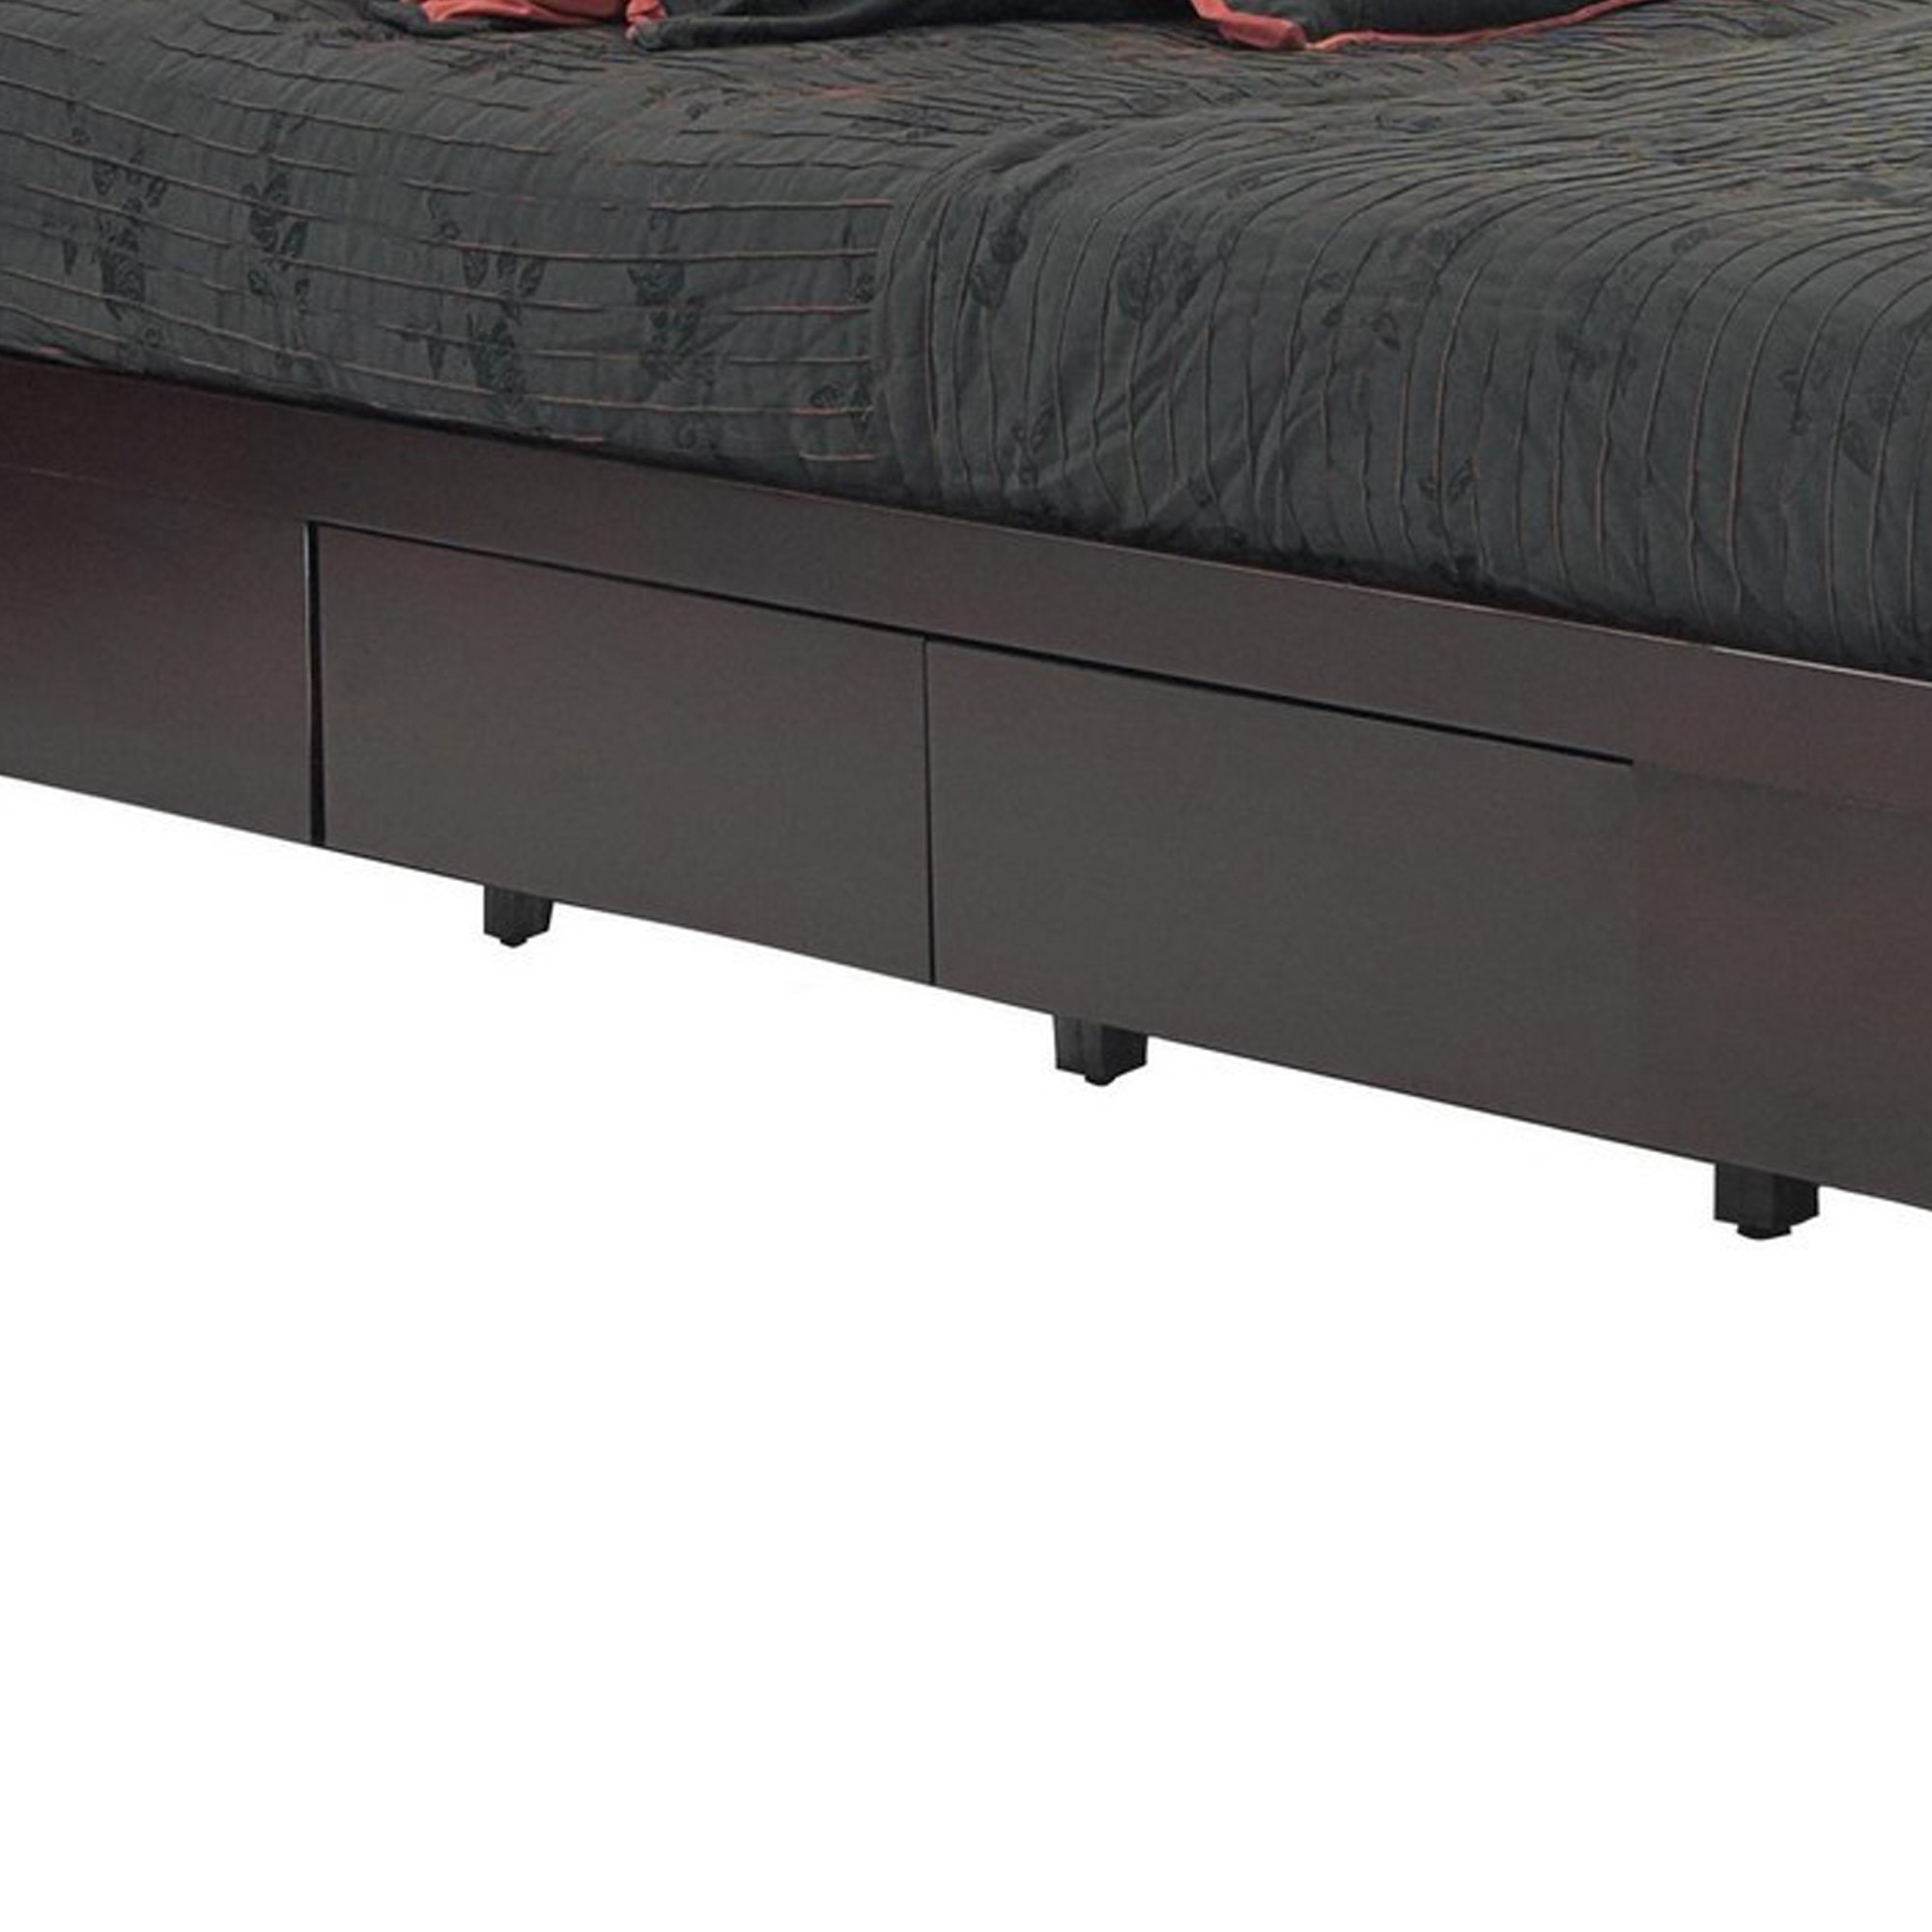 Klio Queen Size Bed, 4 Storage Drawers, Low Profile, Dark Brown Mahogany- Saltoro Sherpi